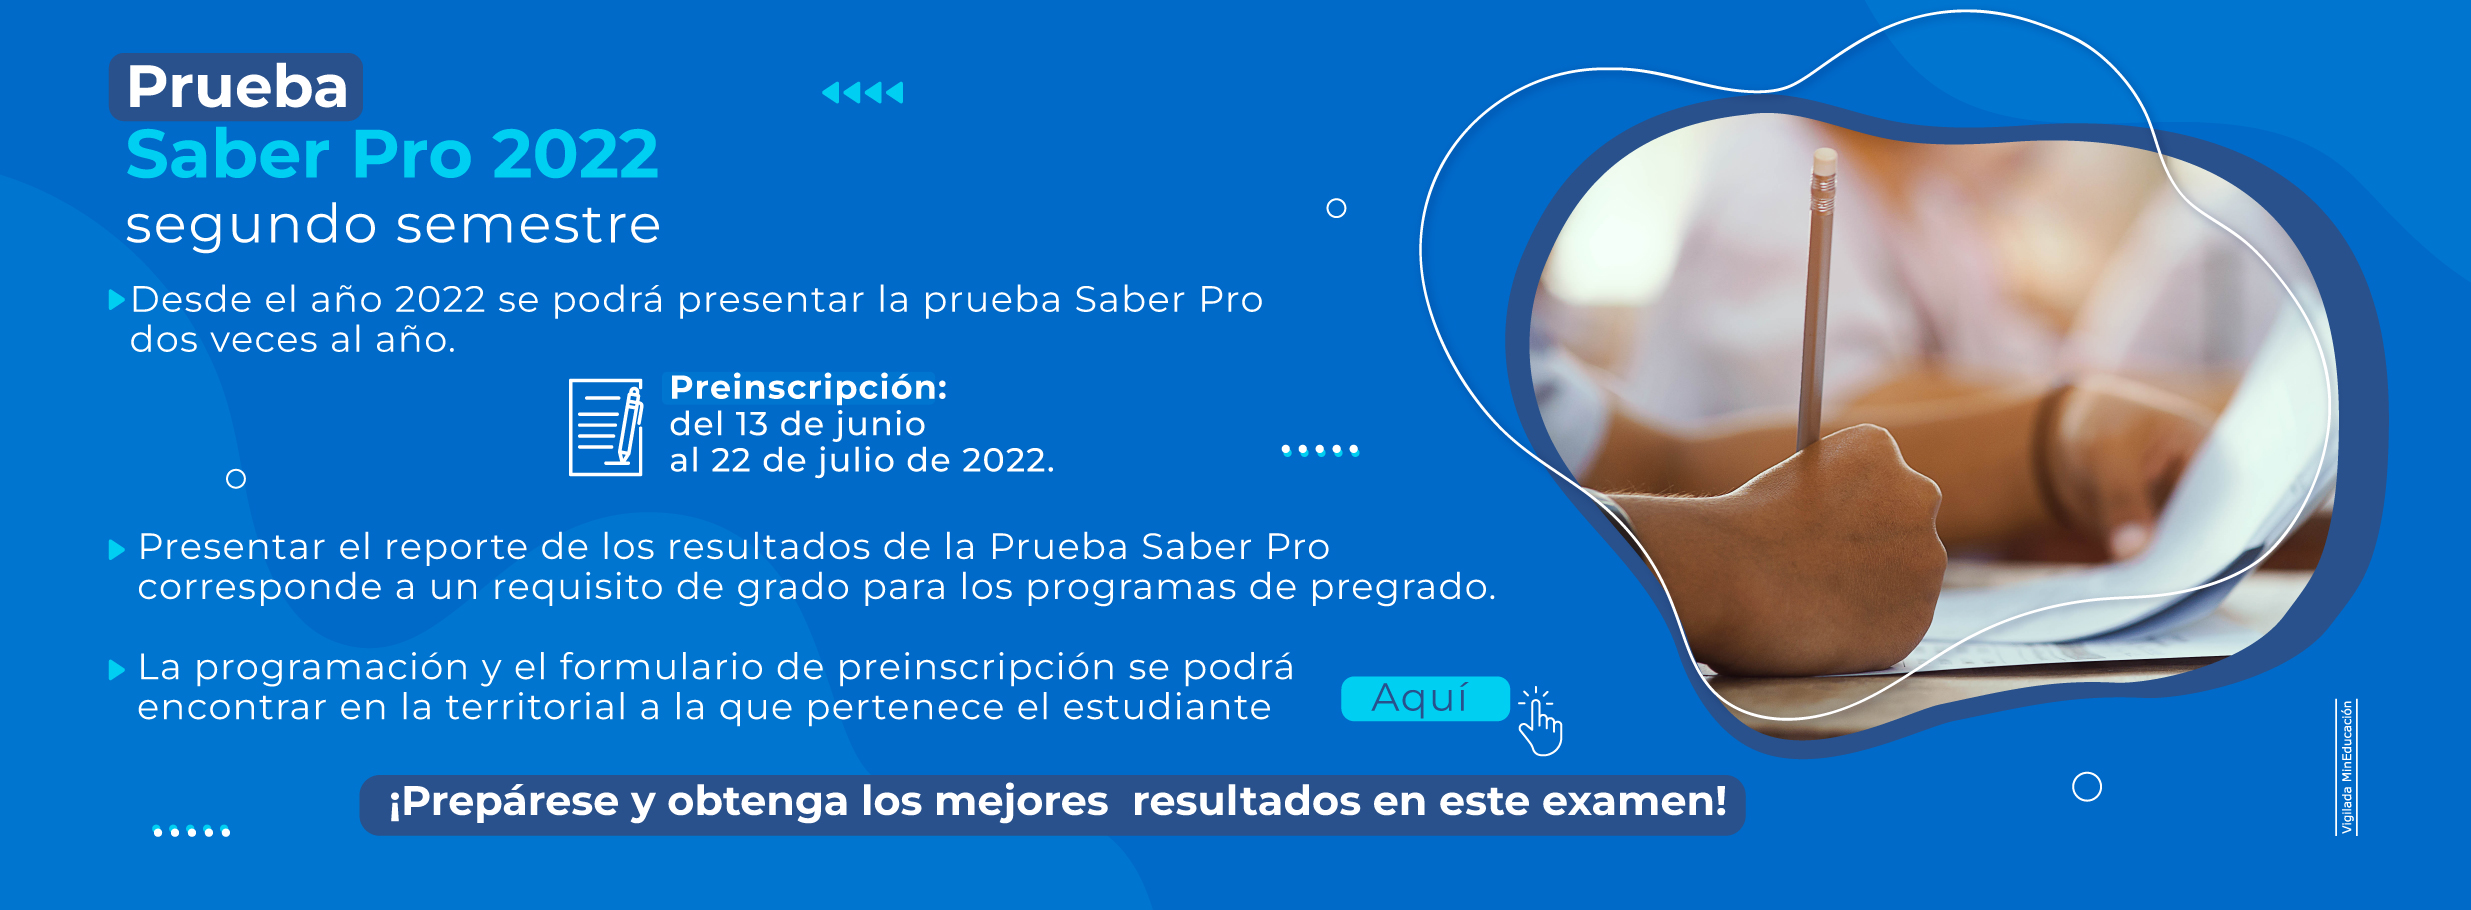 Prueba Saber Pro 2022 segundo semestre - Facultad de Pregrado_BANNER